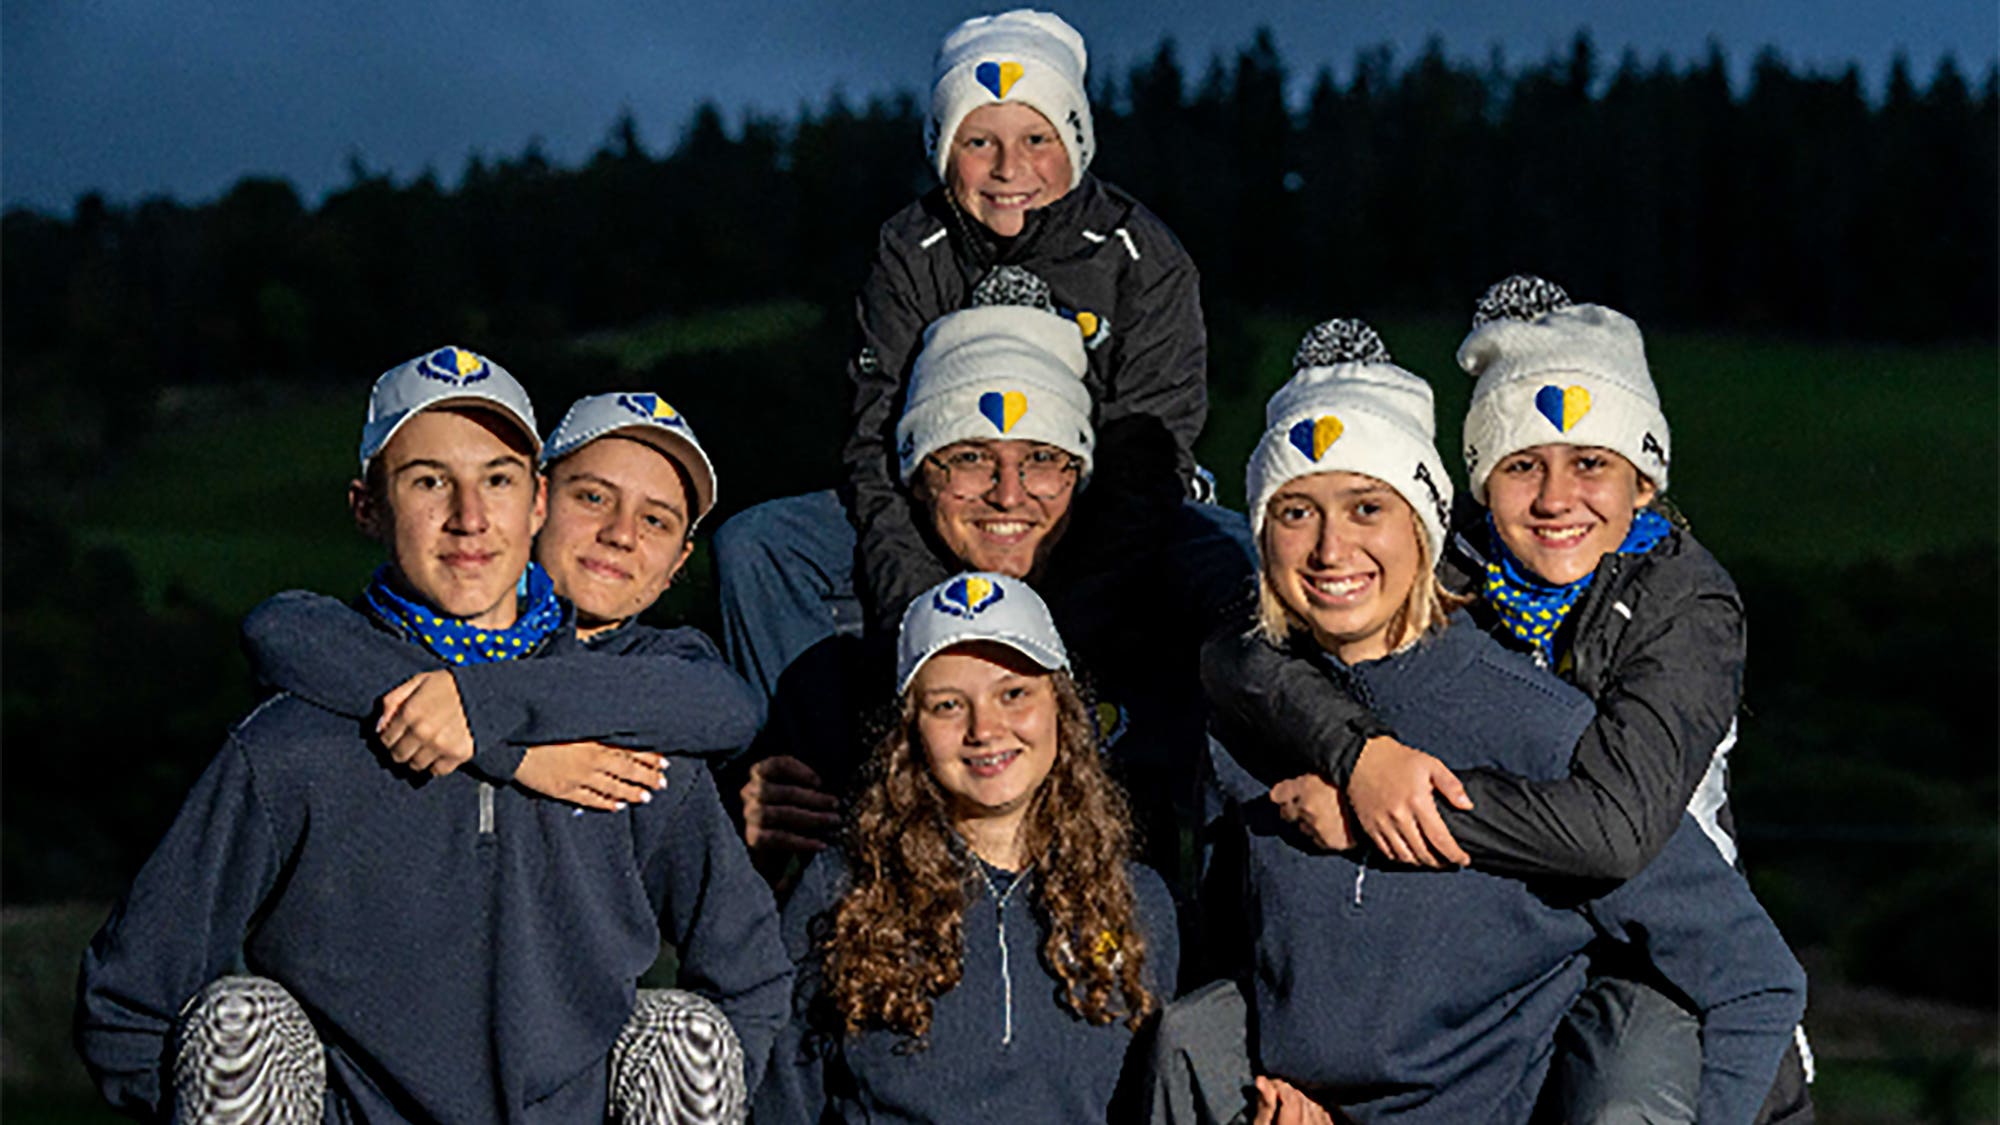 Ukrainian junior golfers’ visit to Scotland ‘has changed their lives’